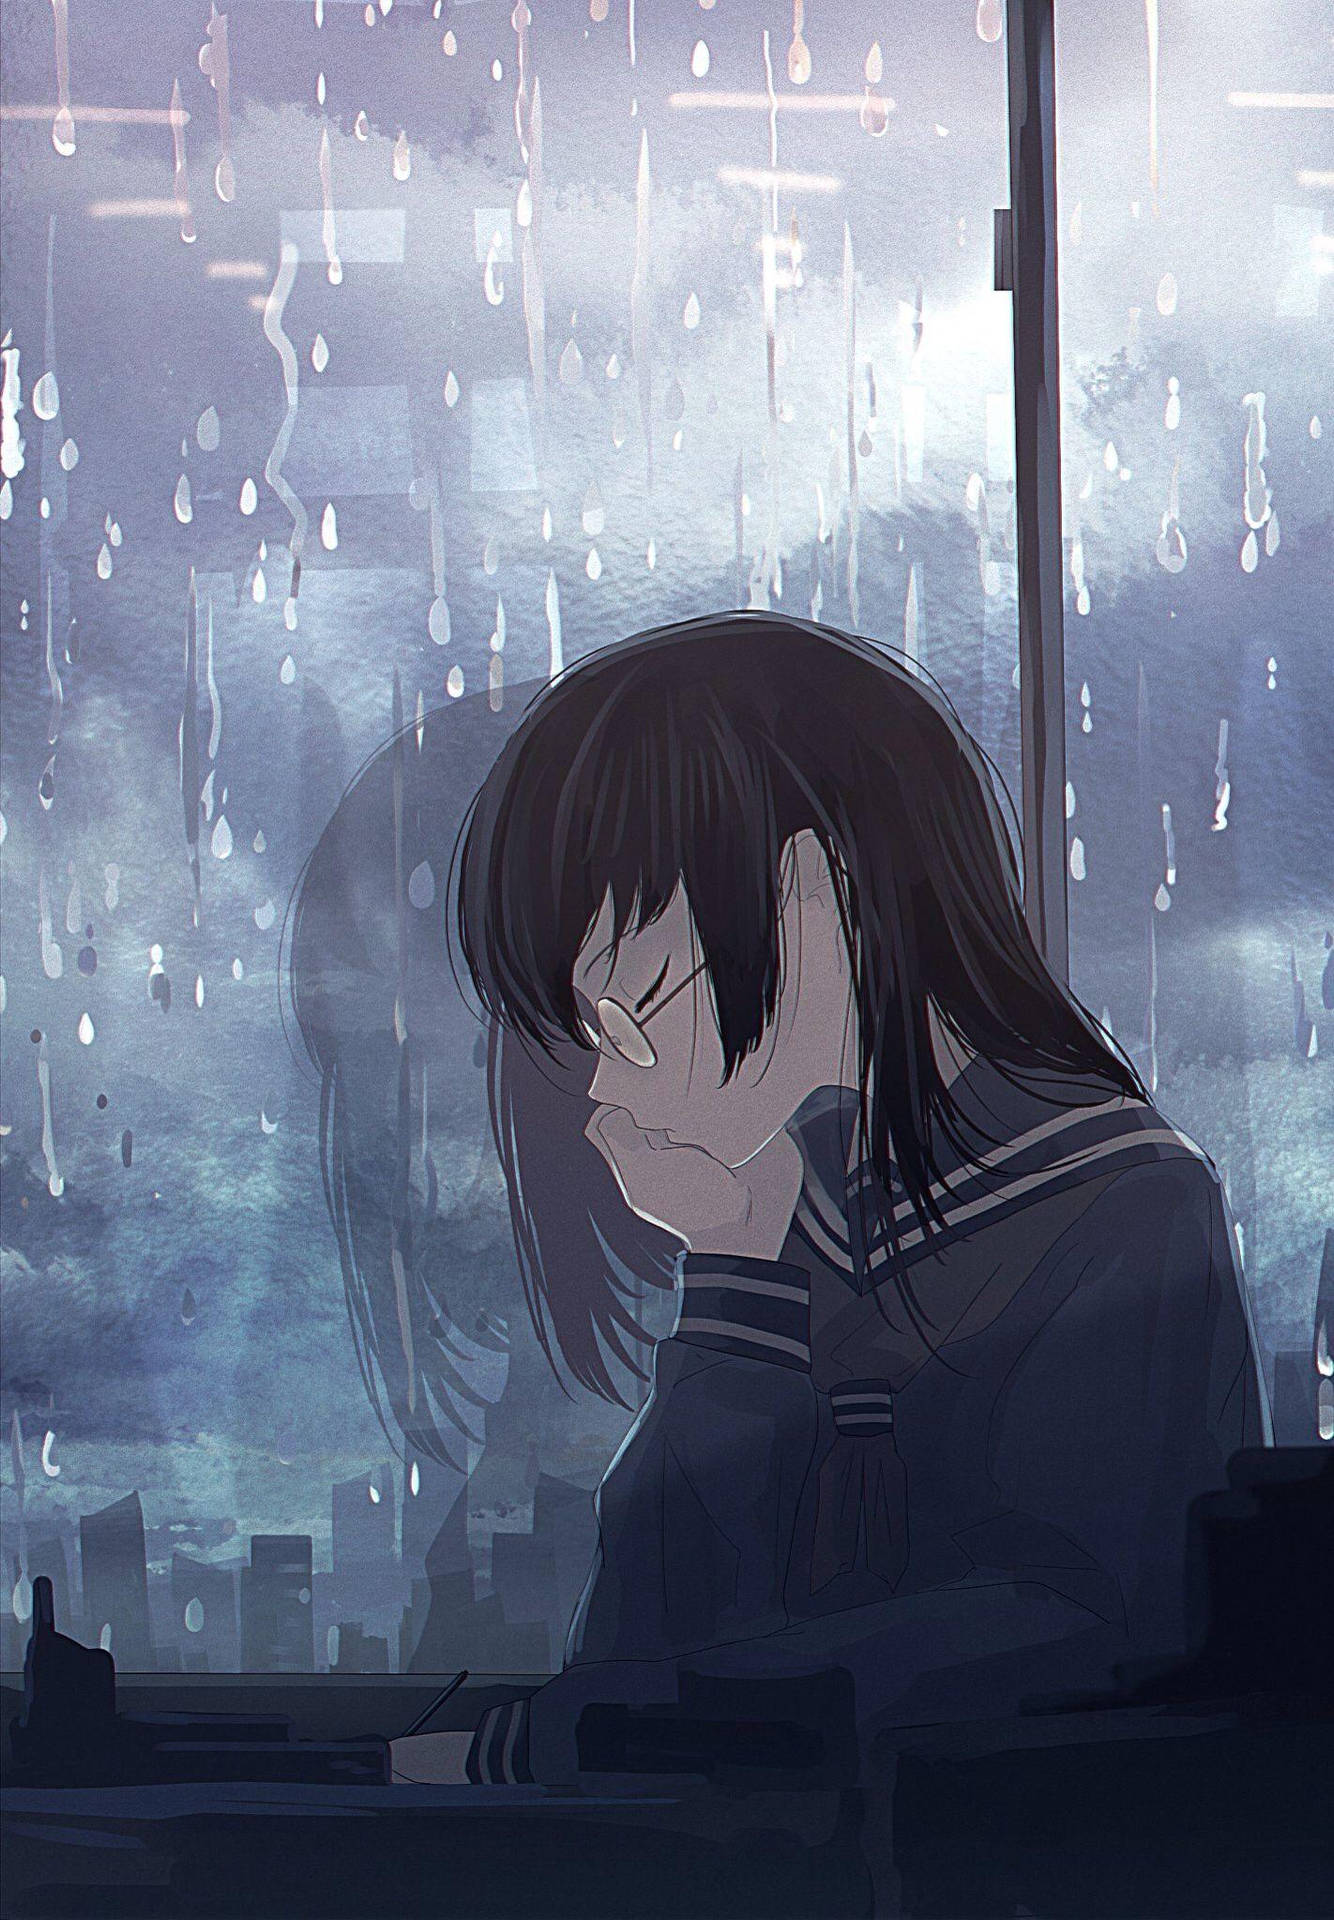 Download Anime Girl Sad Alone Sleeping Rainy Night Wallpaper | Wallpapers .com